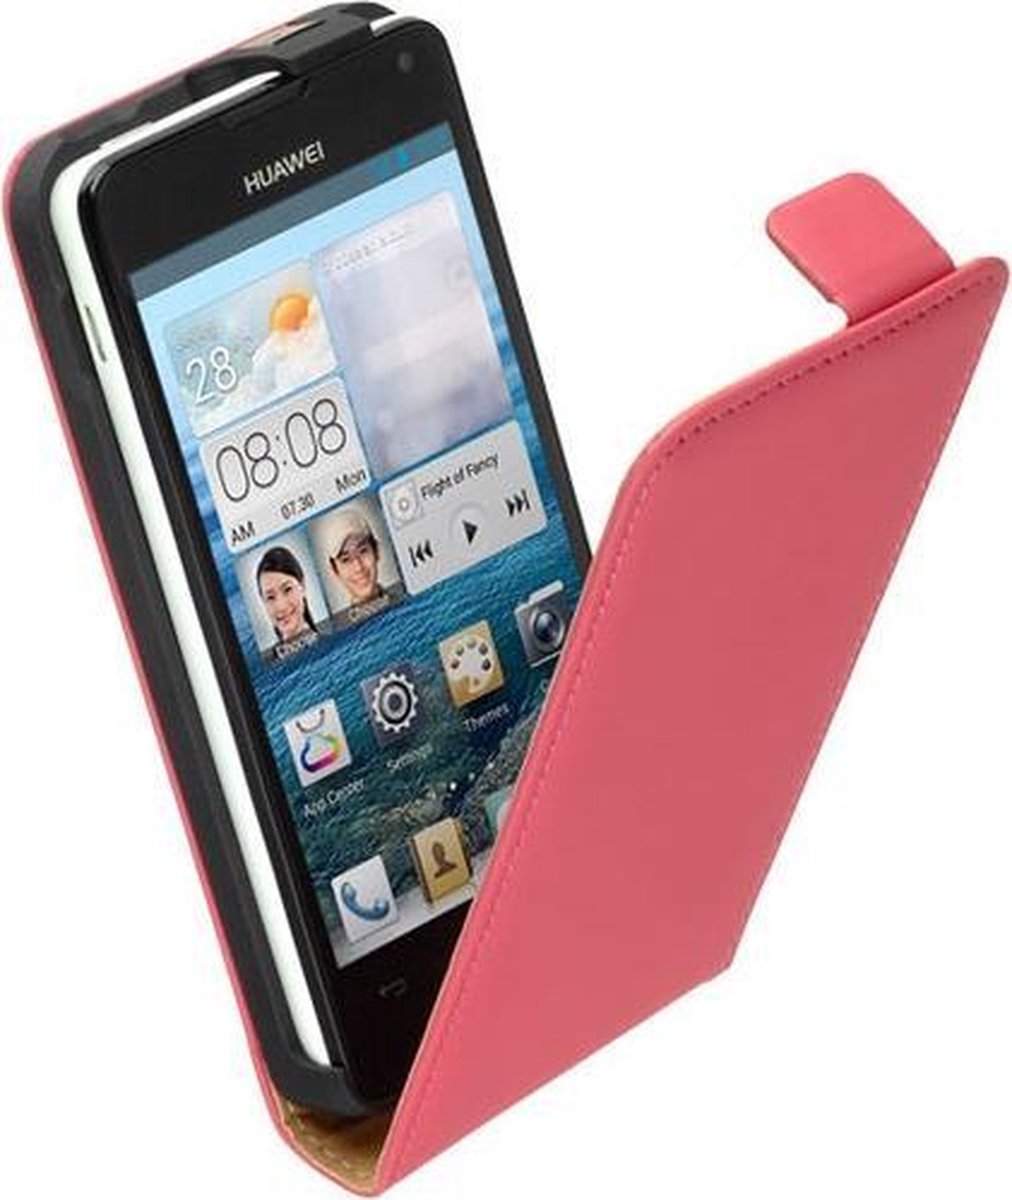 LELYCASE Lederen Flip Case Cover Hoesje Huawei Ascend Y300 Pink